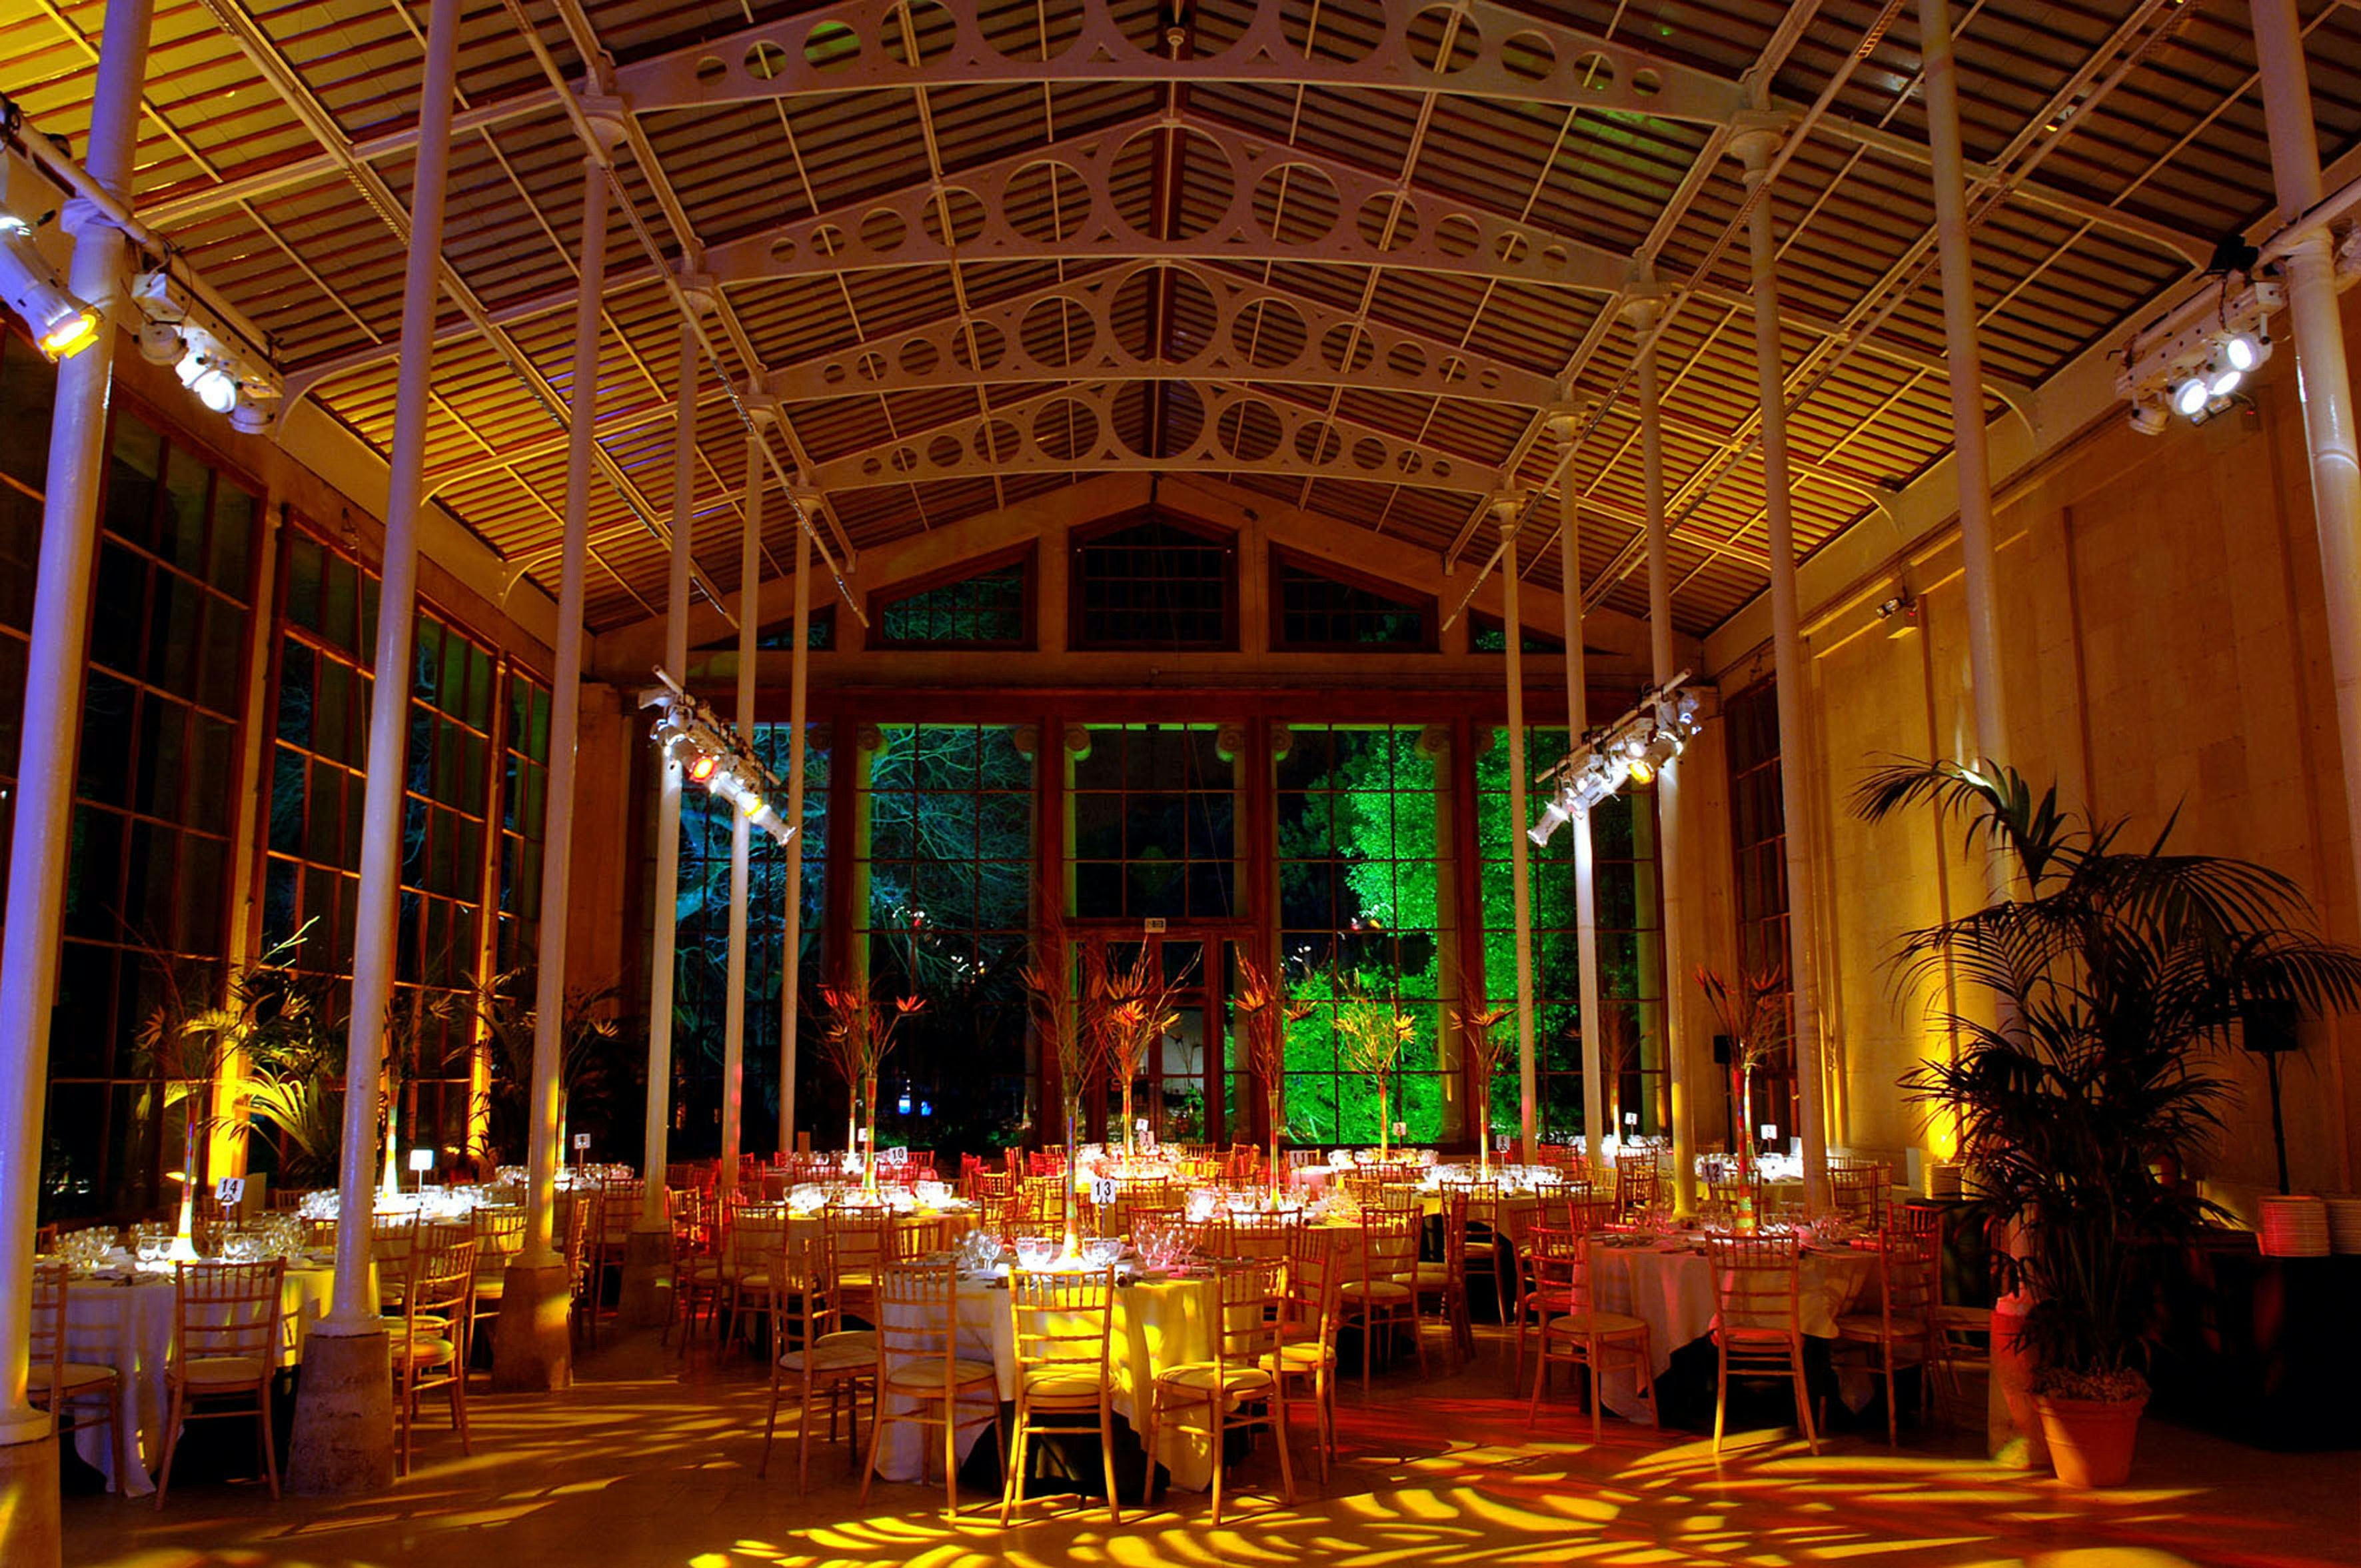 Marriage Proposal Venues in London - Kew Gardens